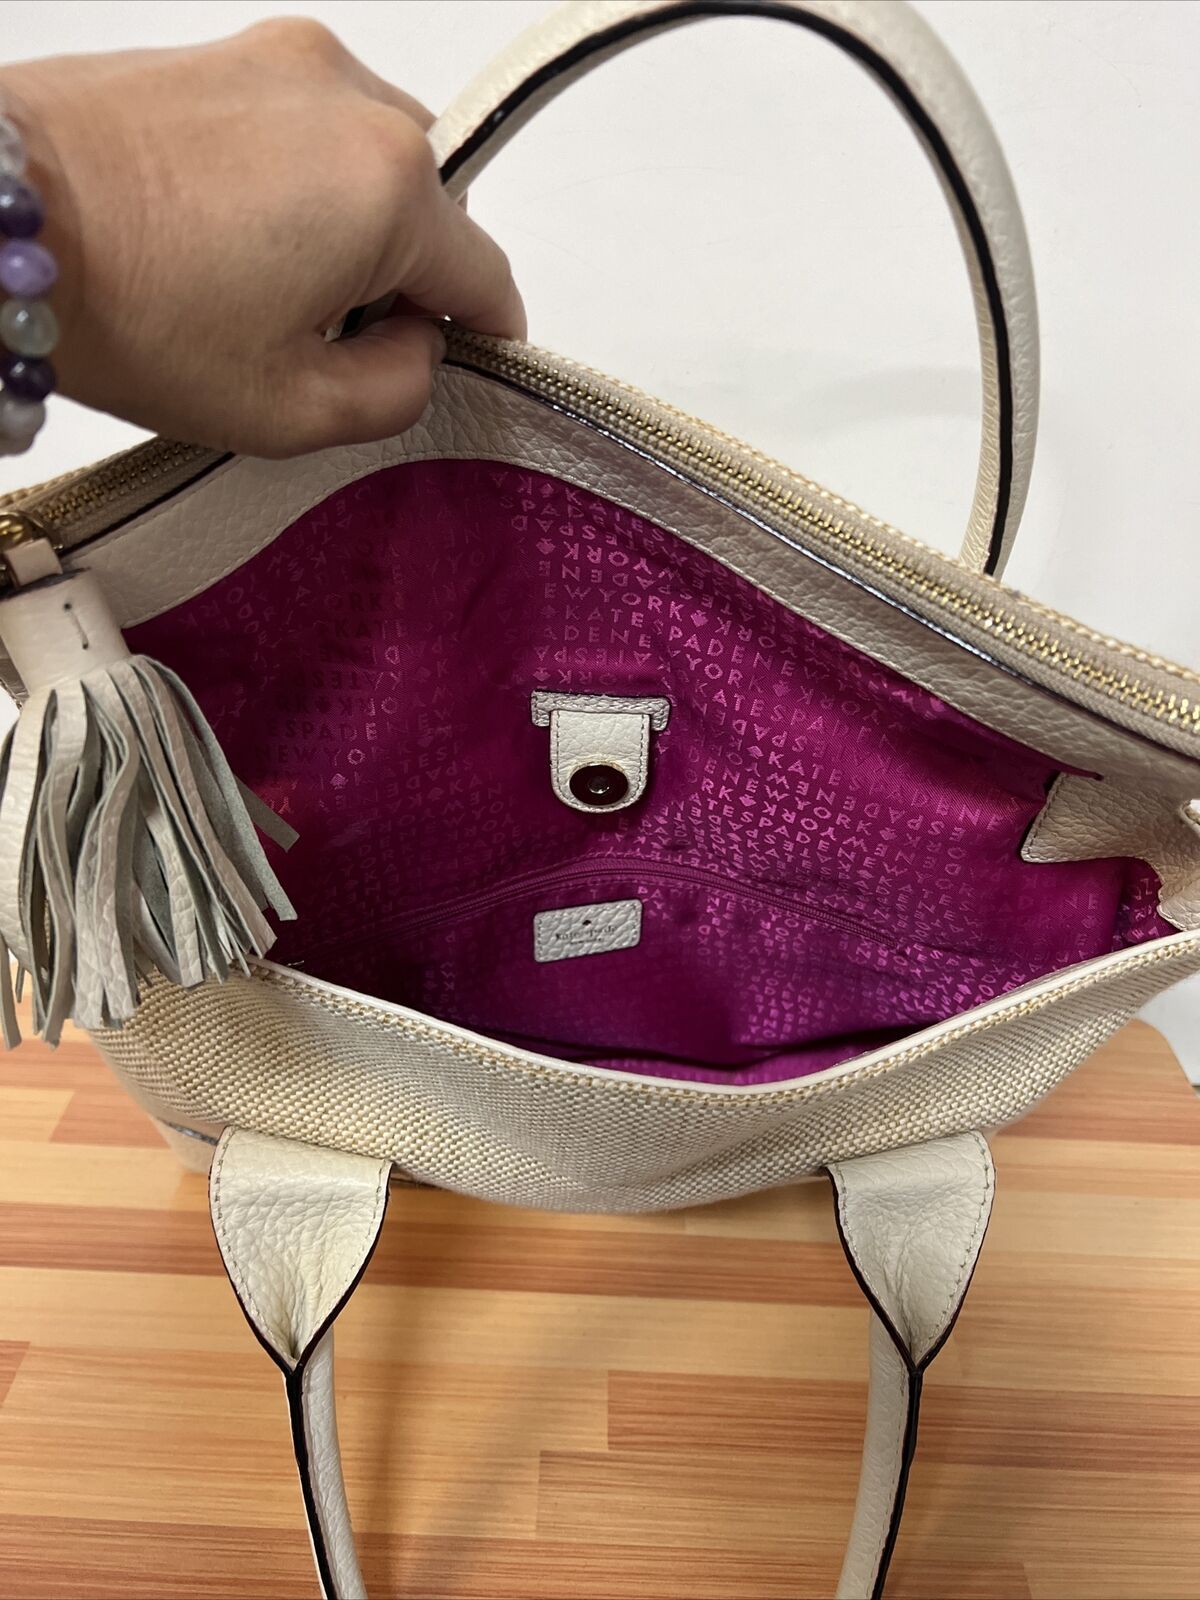 Kate Spade Leather Canvas Cream Tan Tassel Fold Over Womens Bag